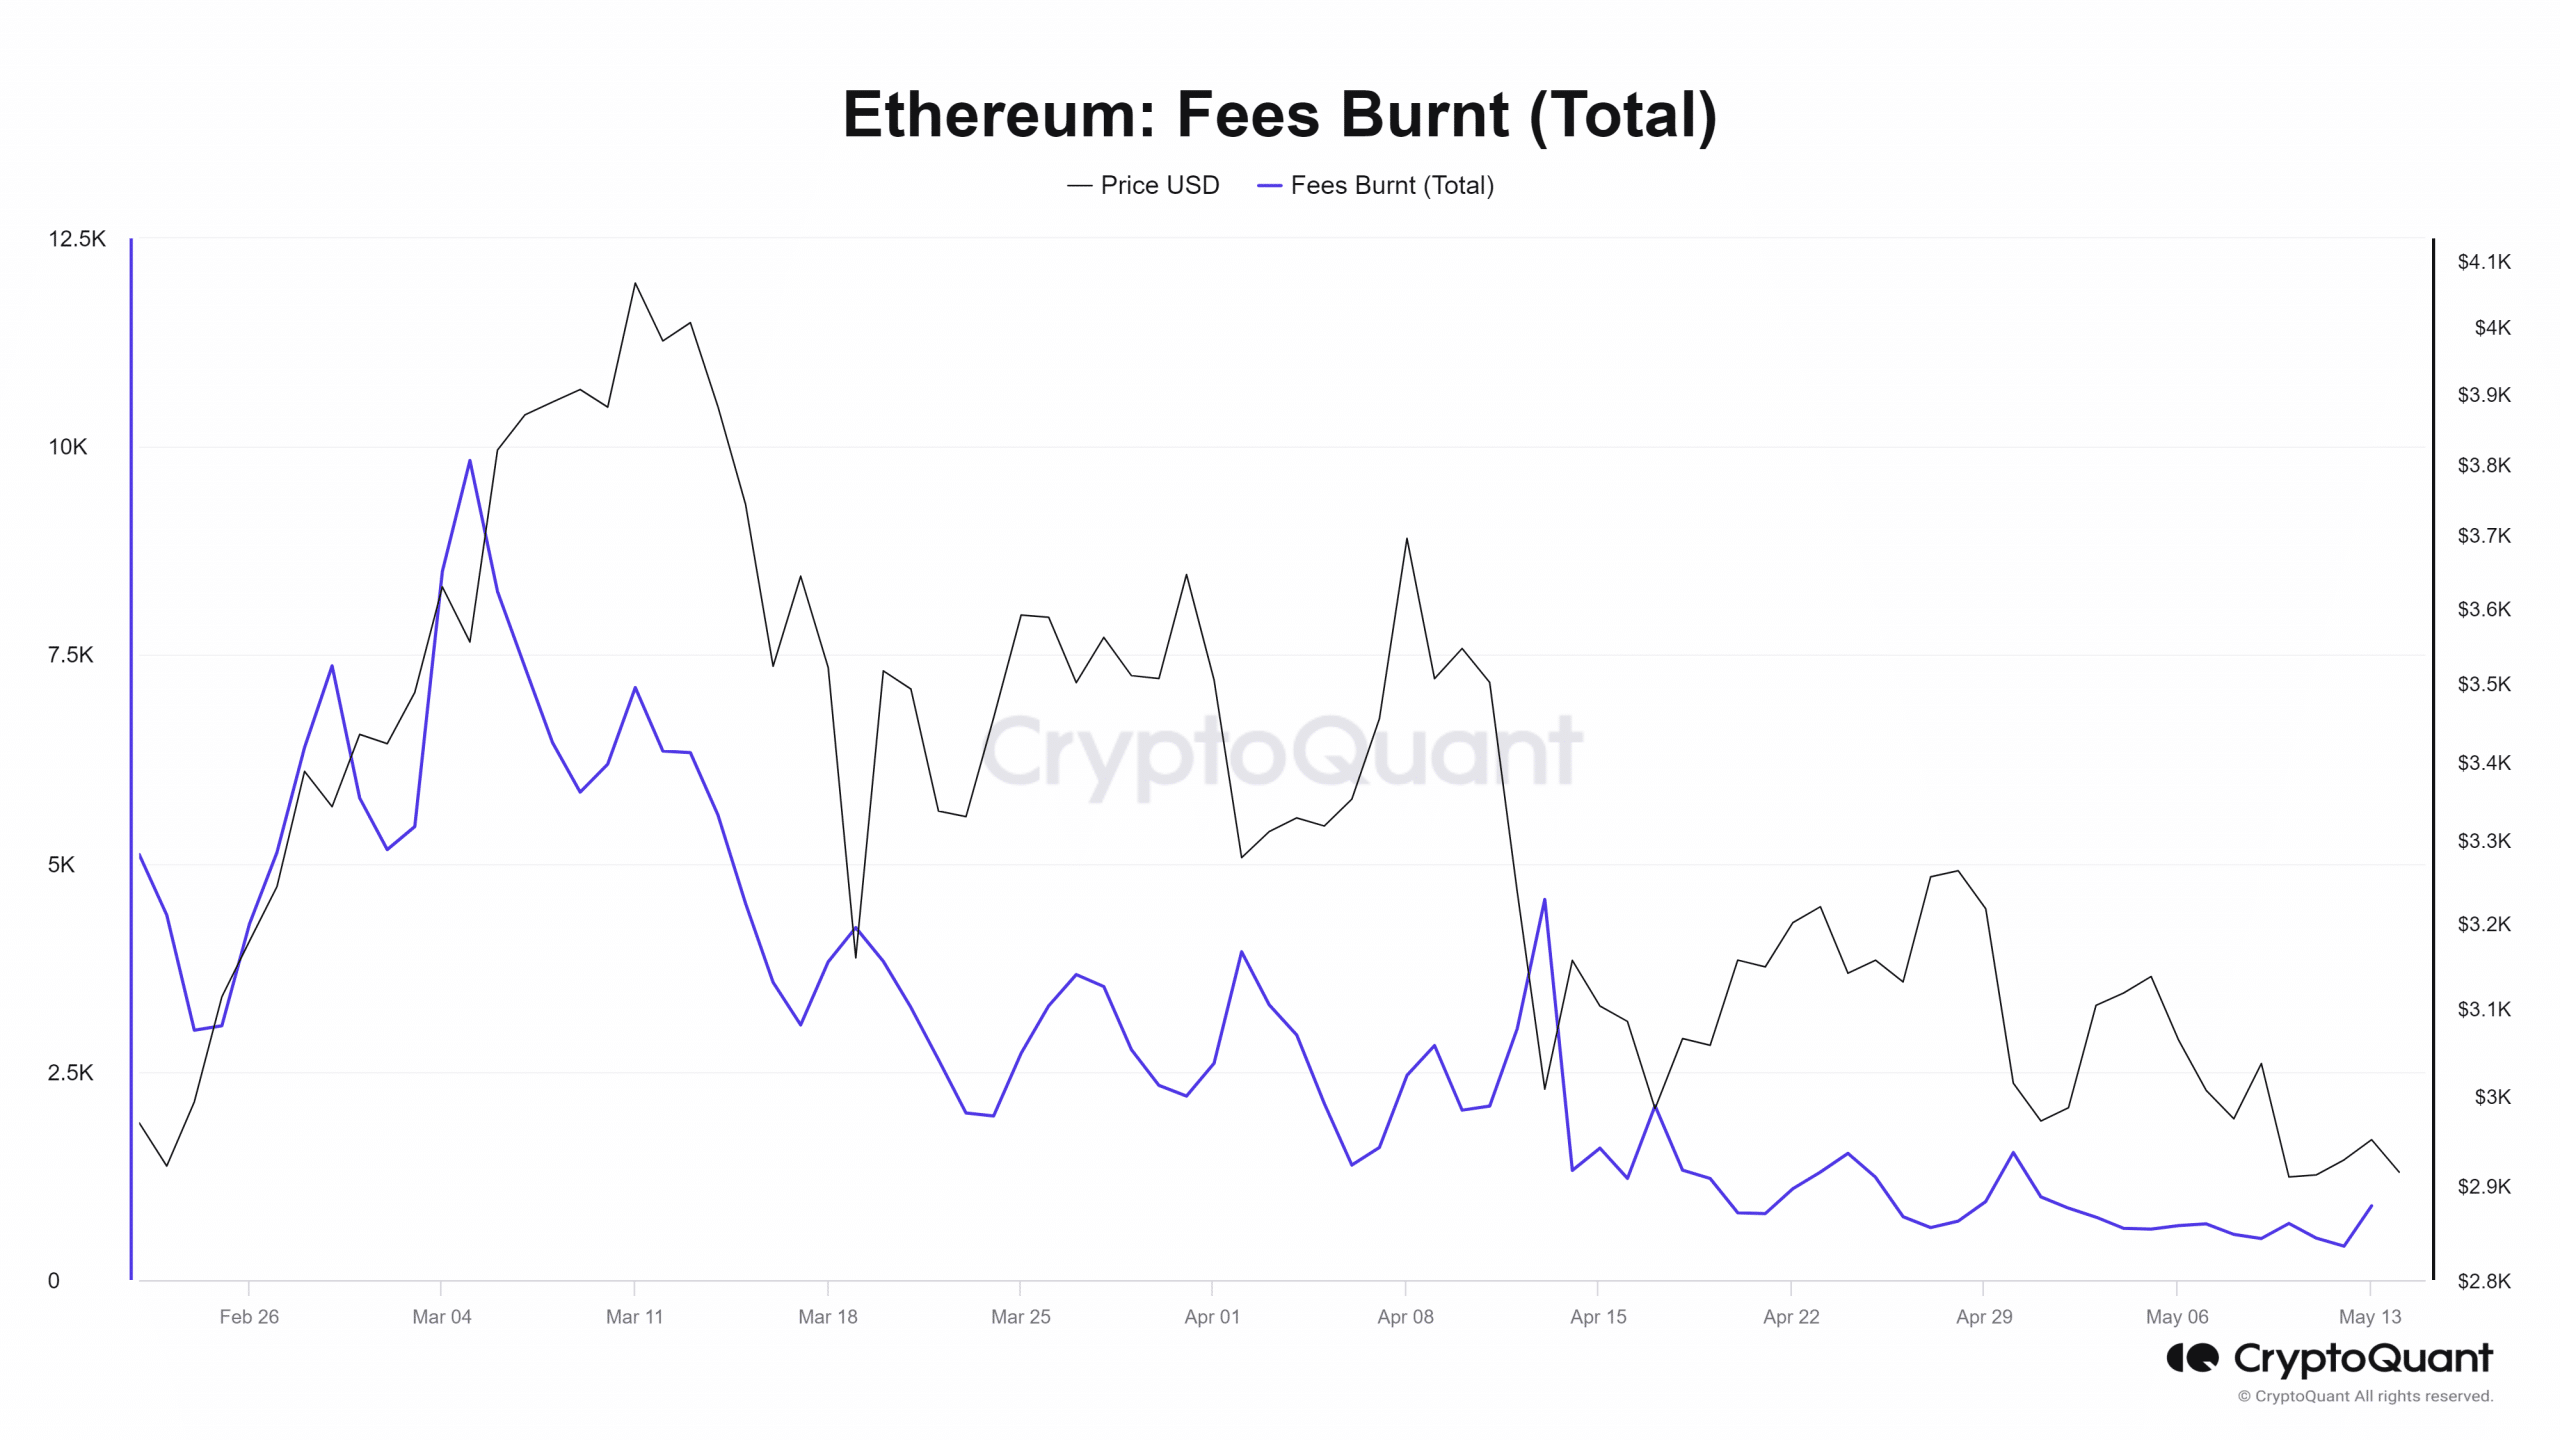 Ethereum total fees burnt